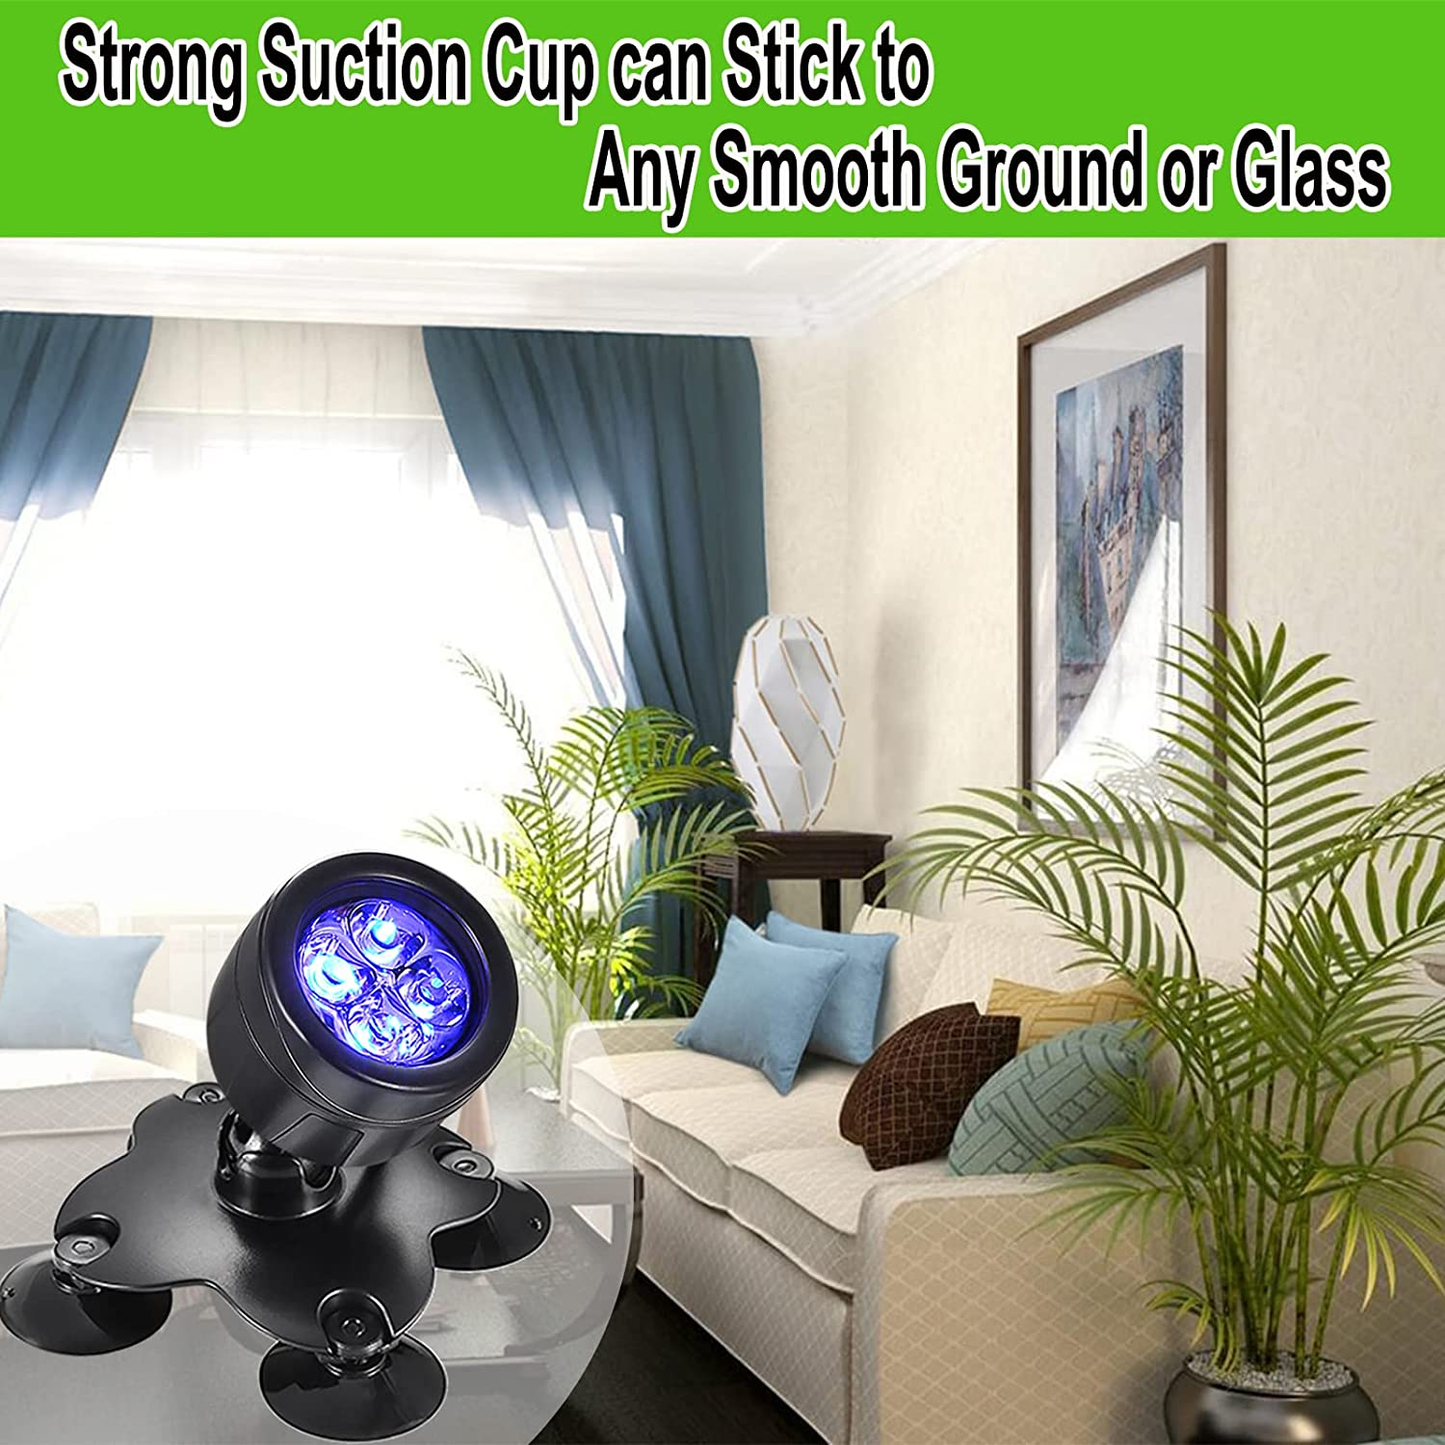 Suction cup spotlight